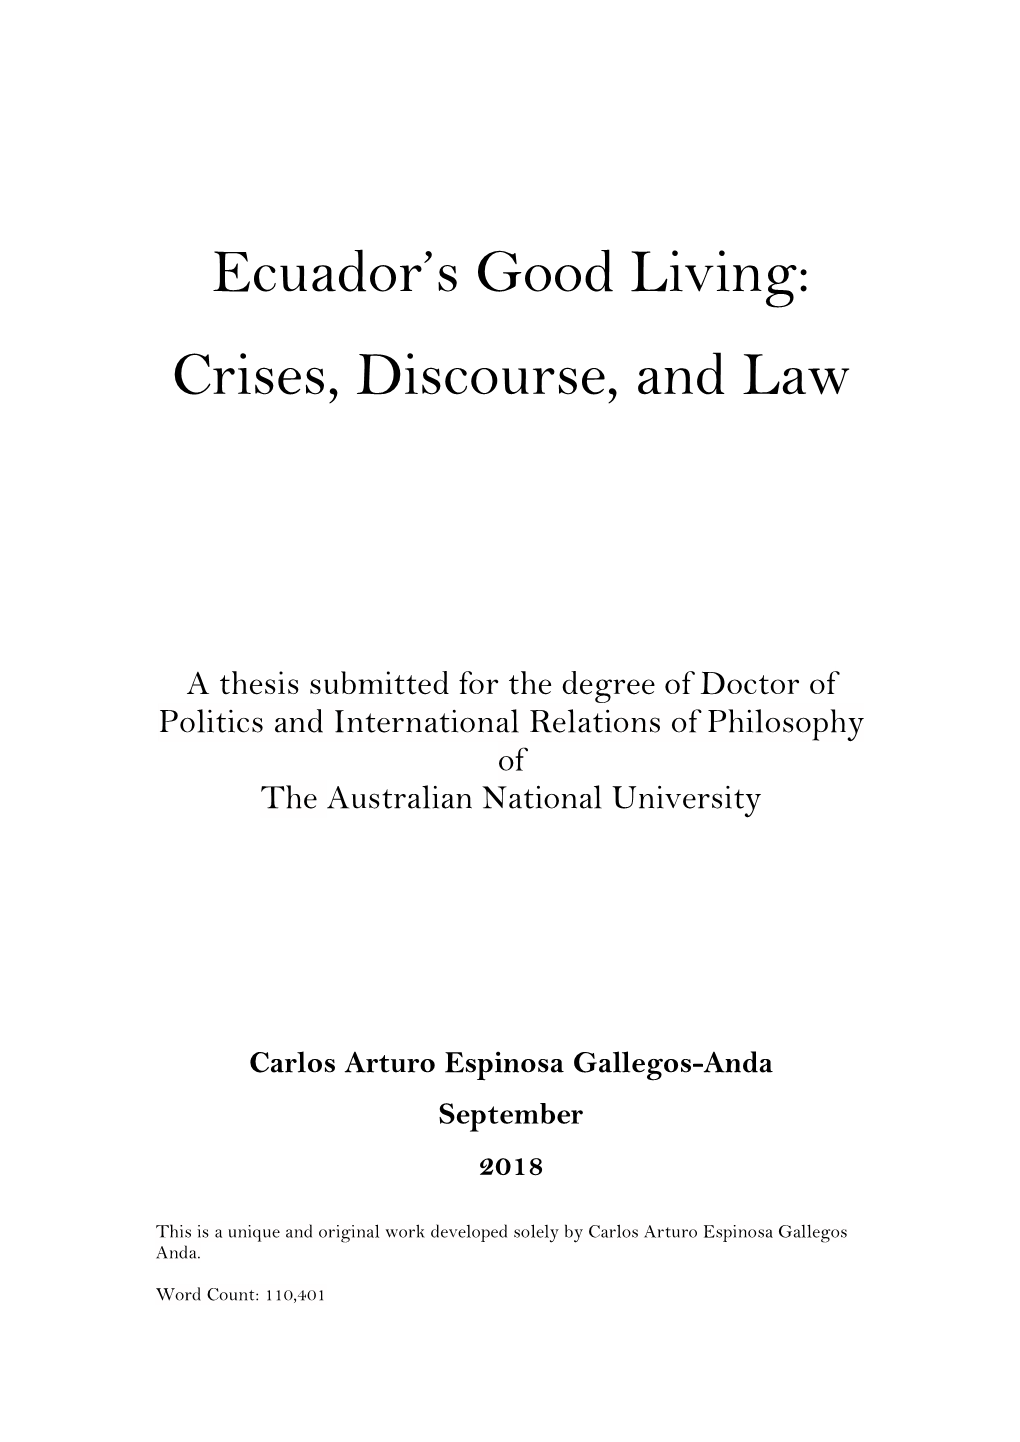 Ecuador's Good Living: Crises, Discourse, And